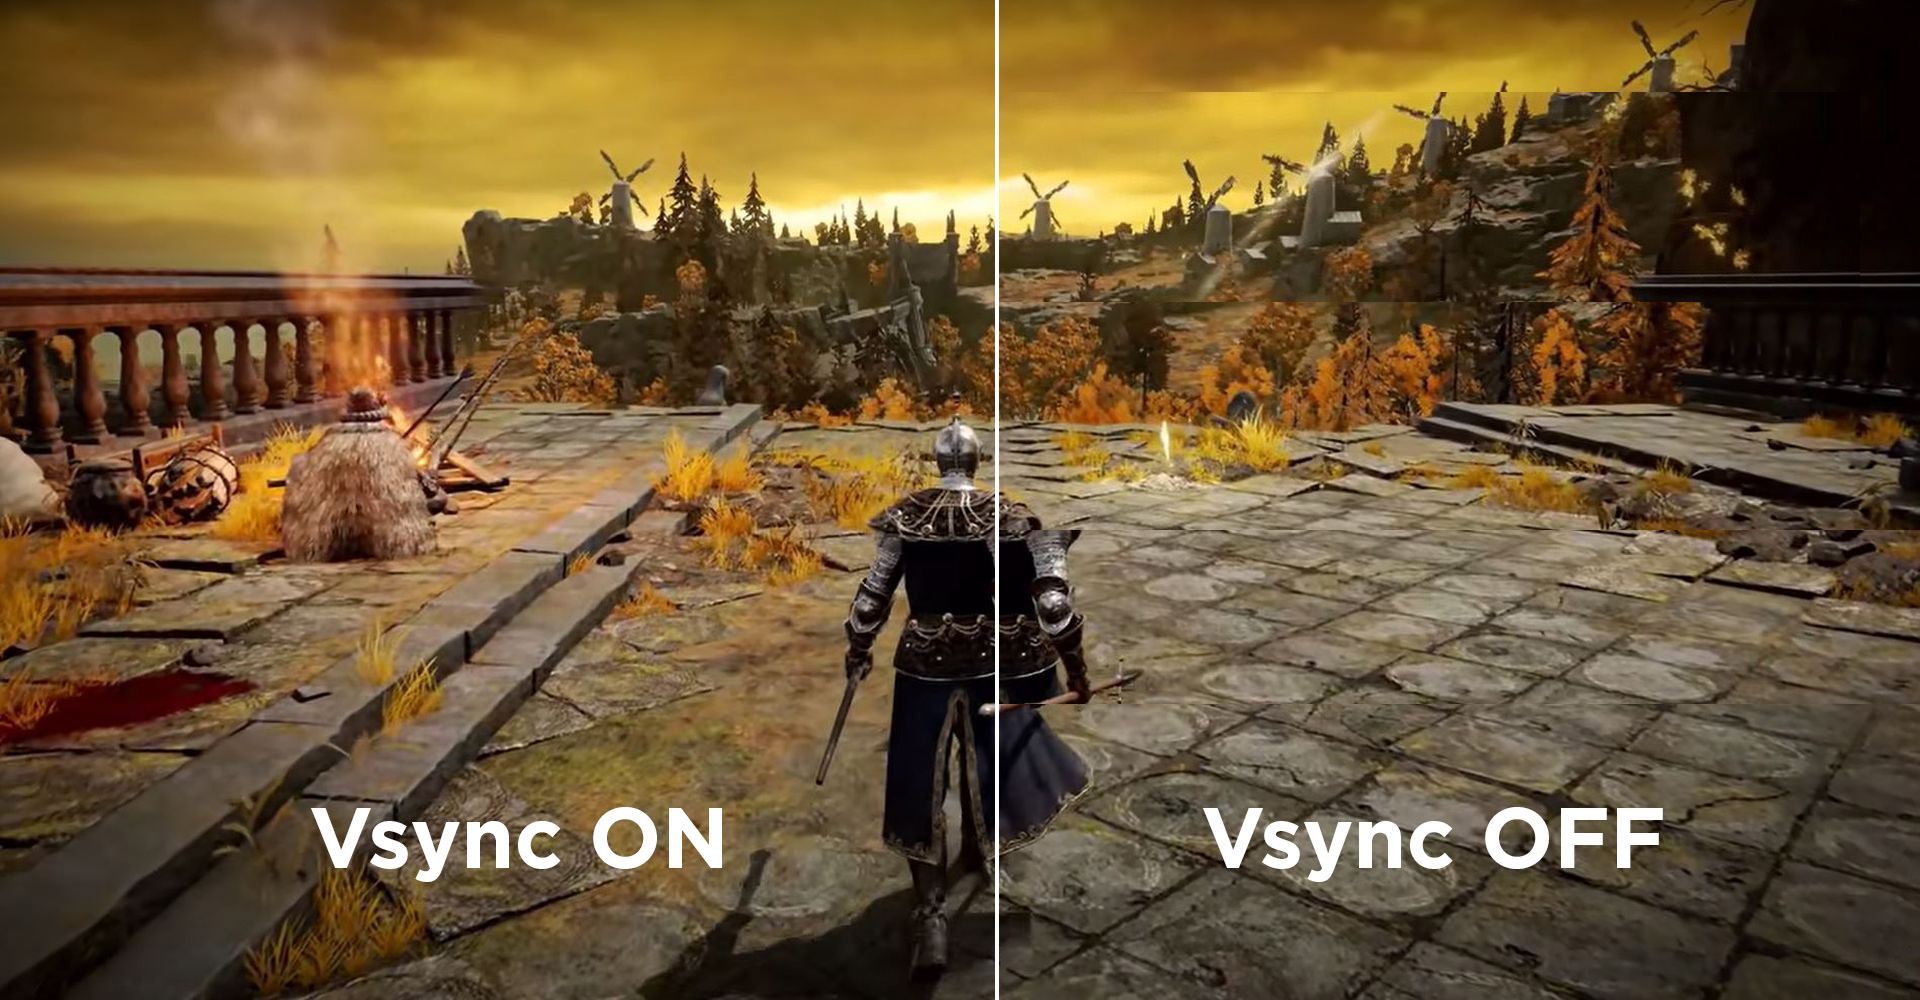 Vsync ON vs OFF